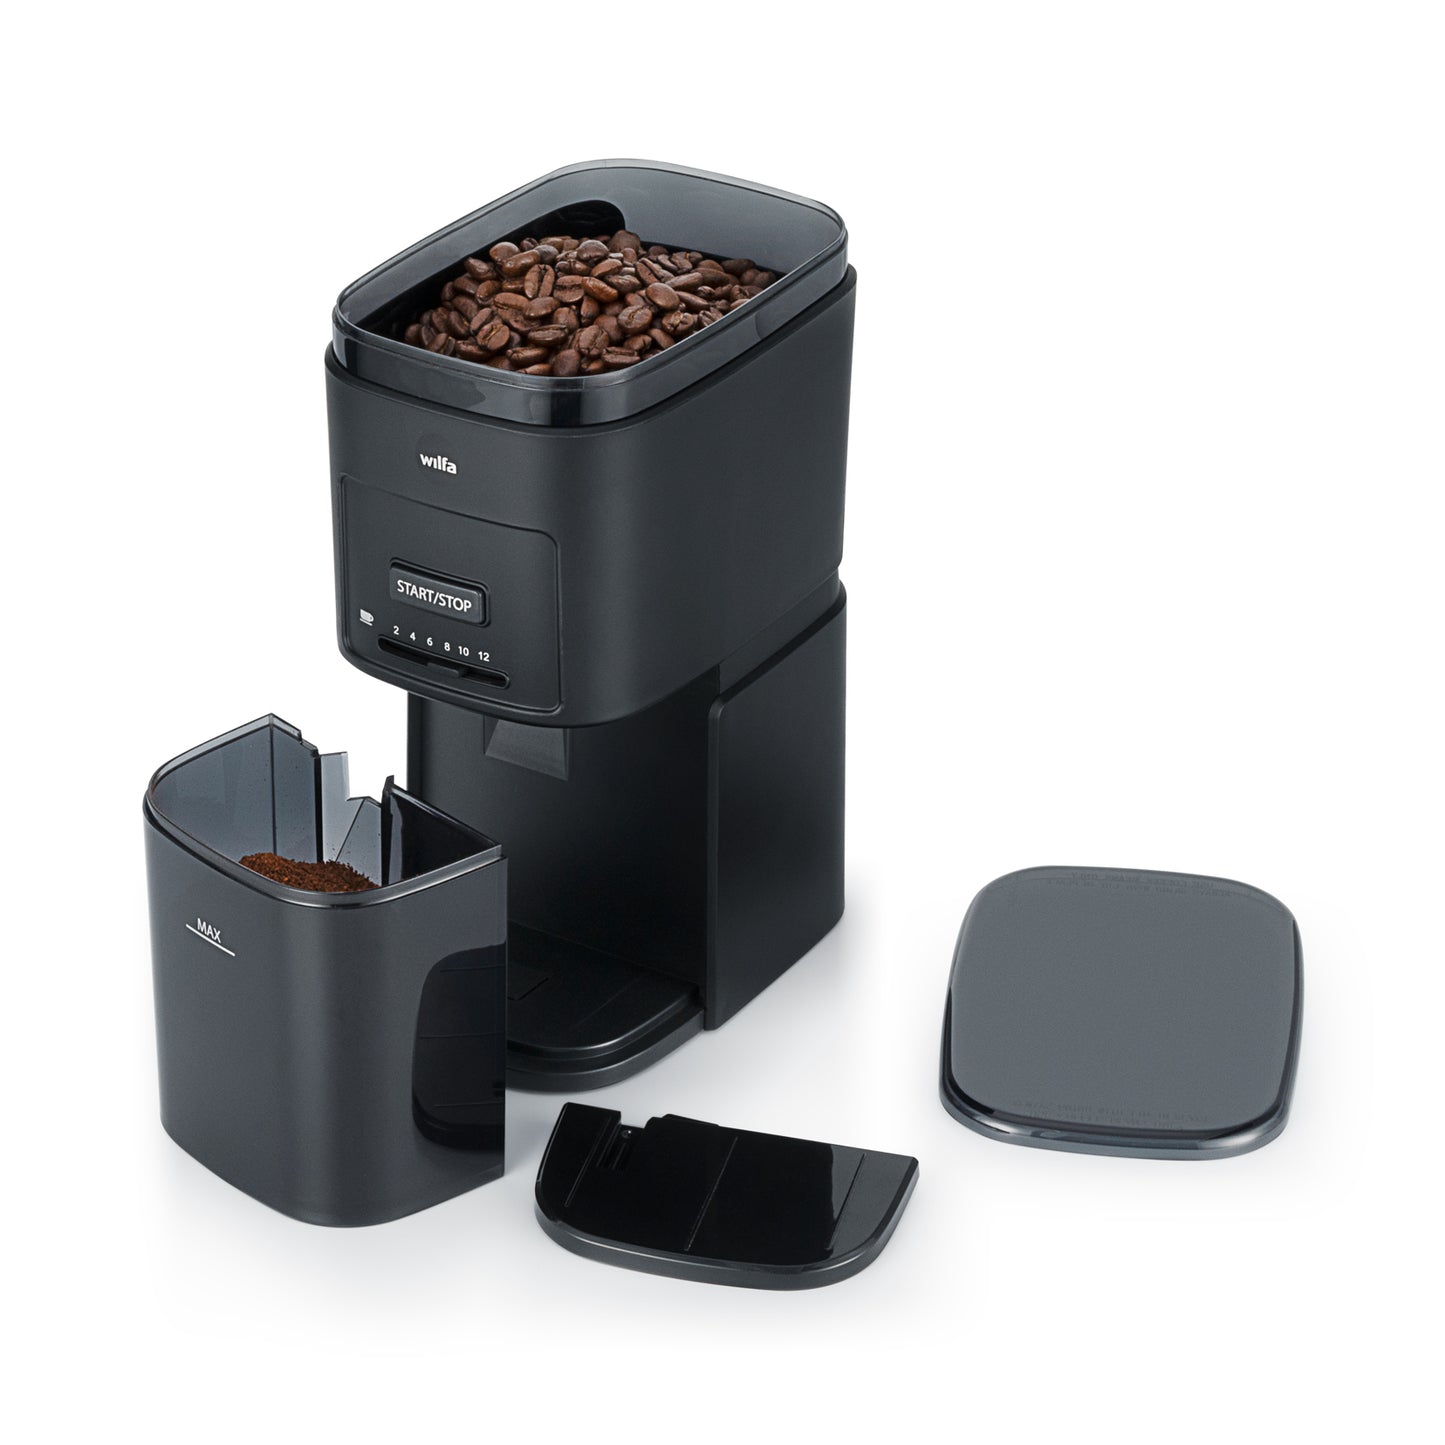 Wilfa DAILY CG2G-260 coffee grinder